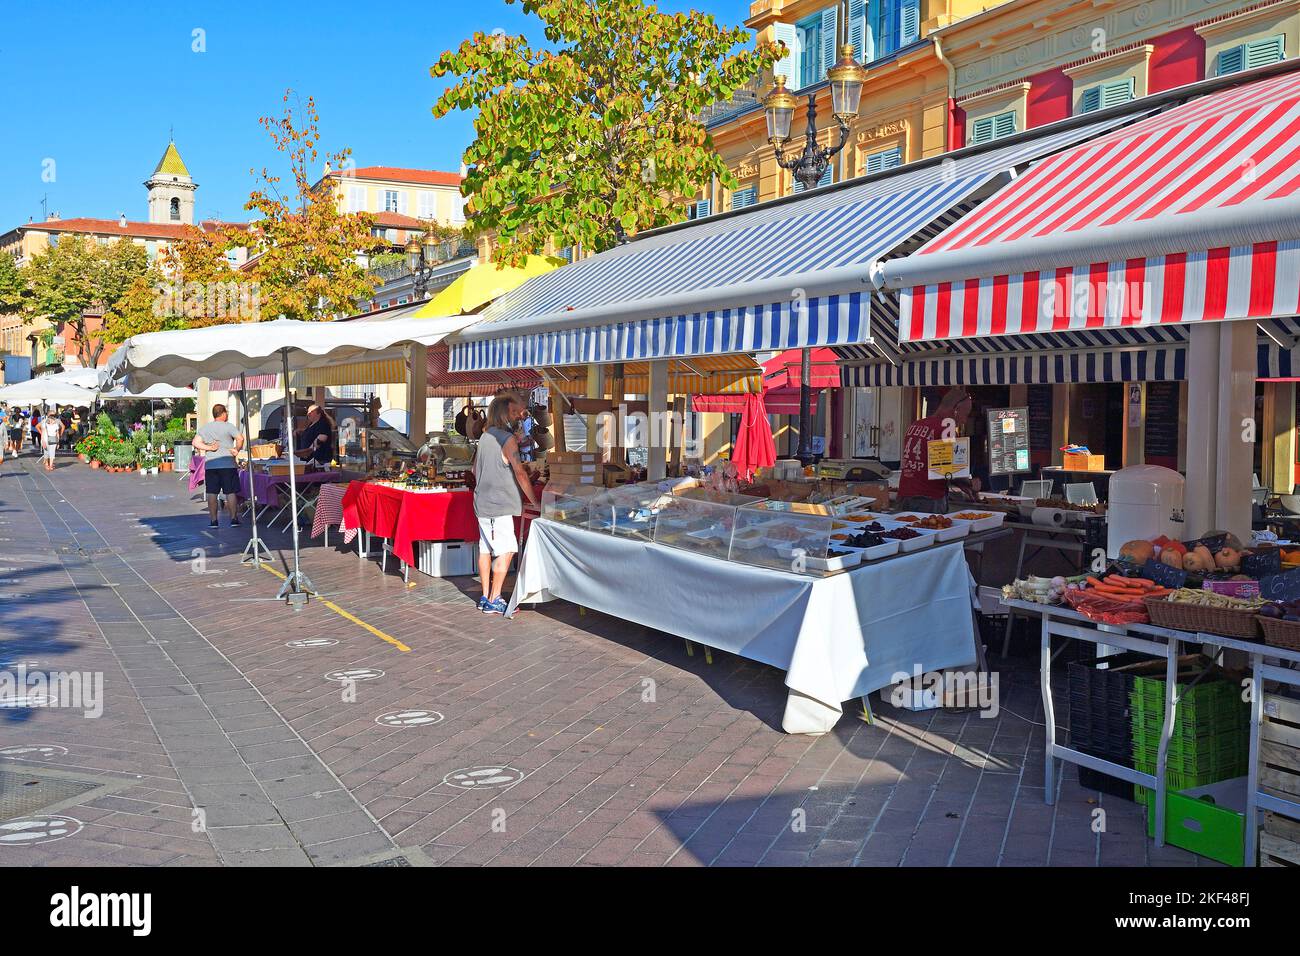 Markt auf dem Cours Saleya, Innenstadt, Nizza, Département Alpes-Maritimes, Region Provence-Alpes-Côte d’Azur, Frankreich Stockfoto